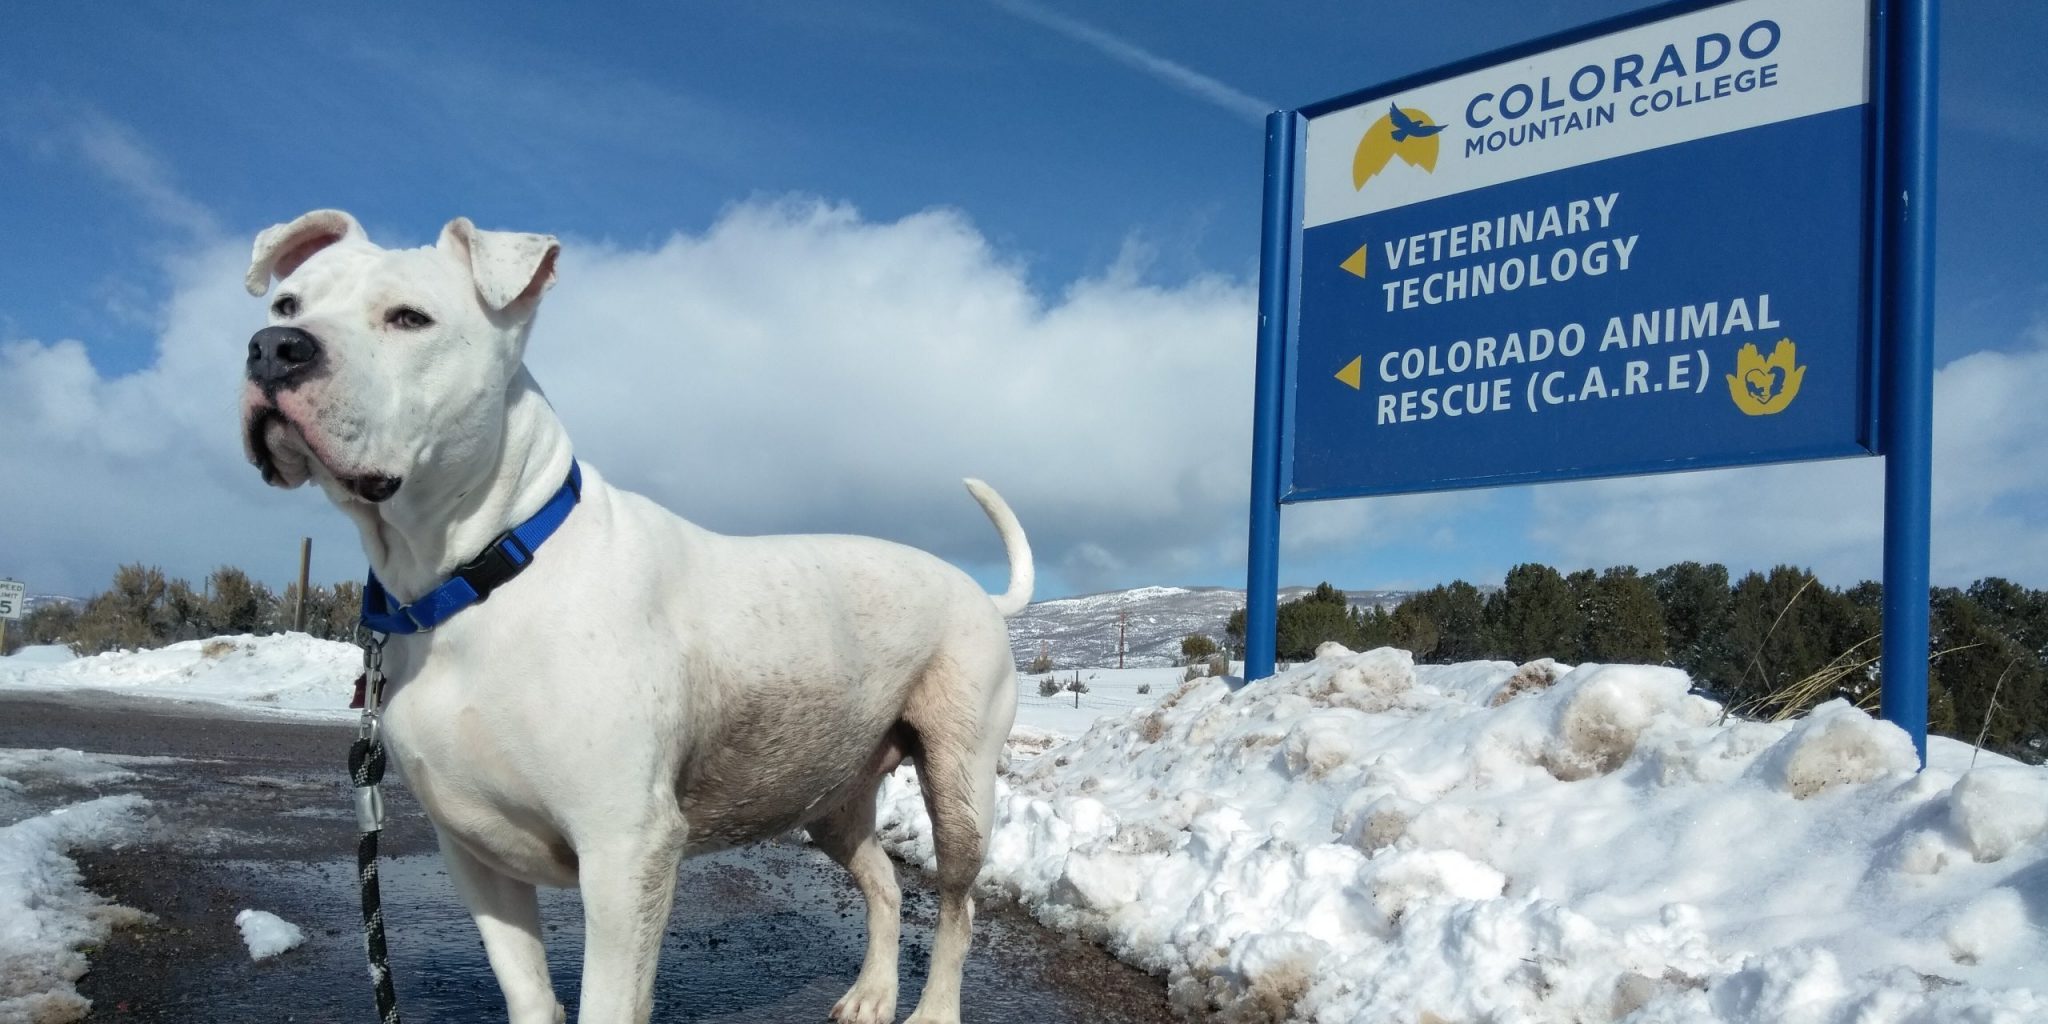 Colorado Animal Rescue Animal Shelter Glenwood Springs